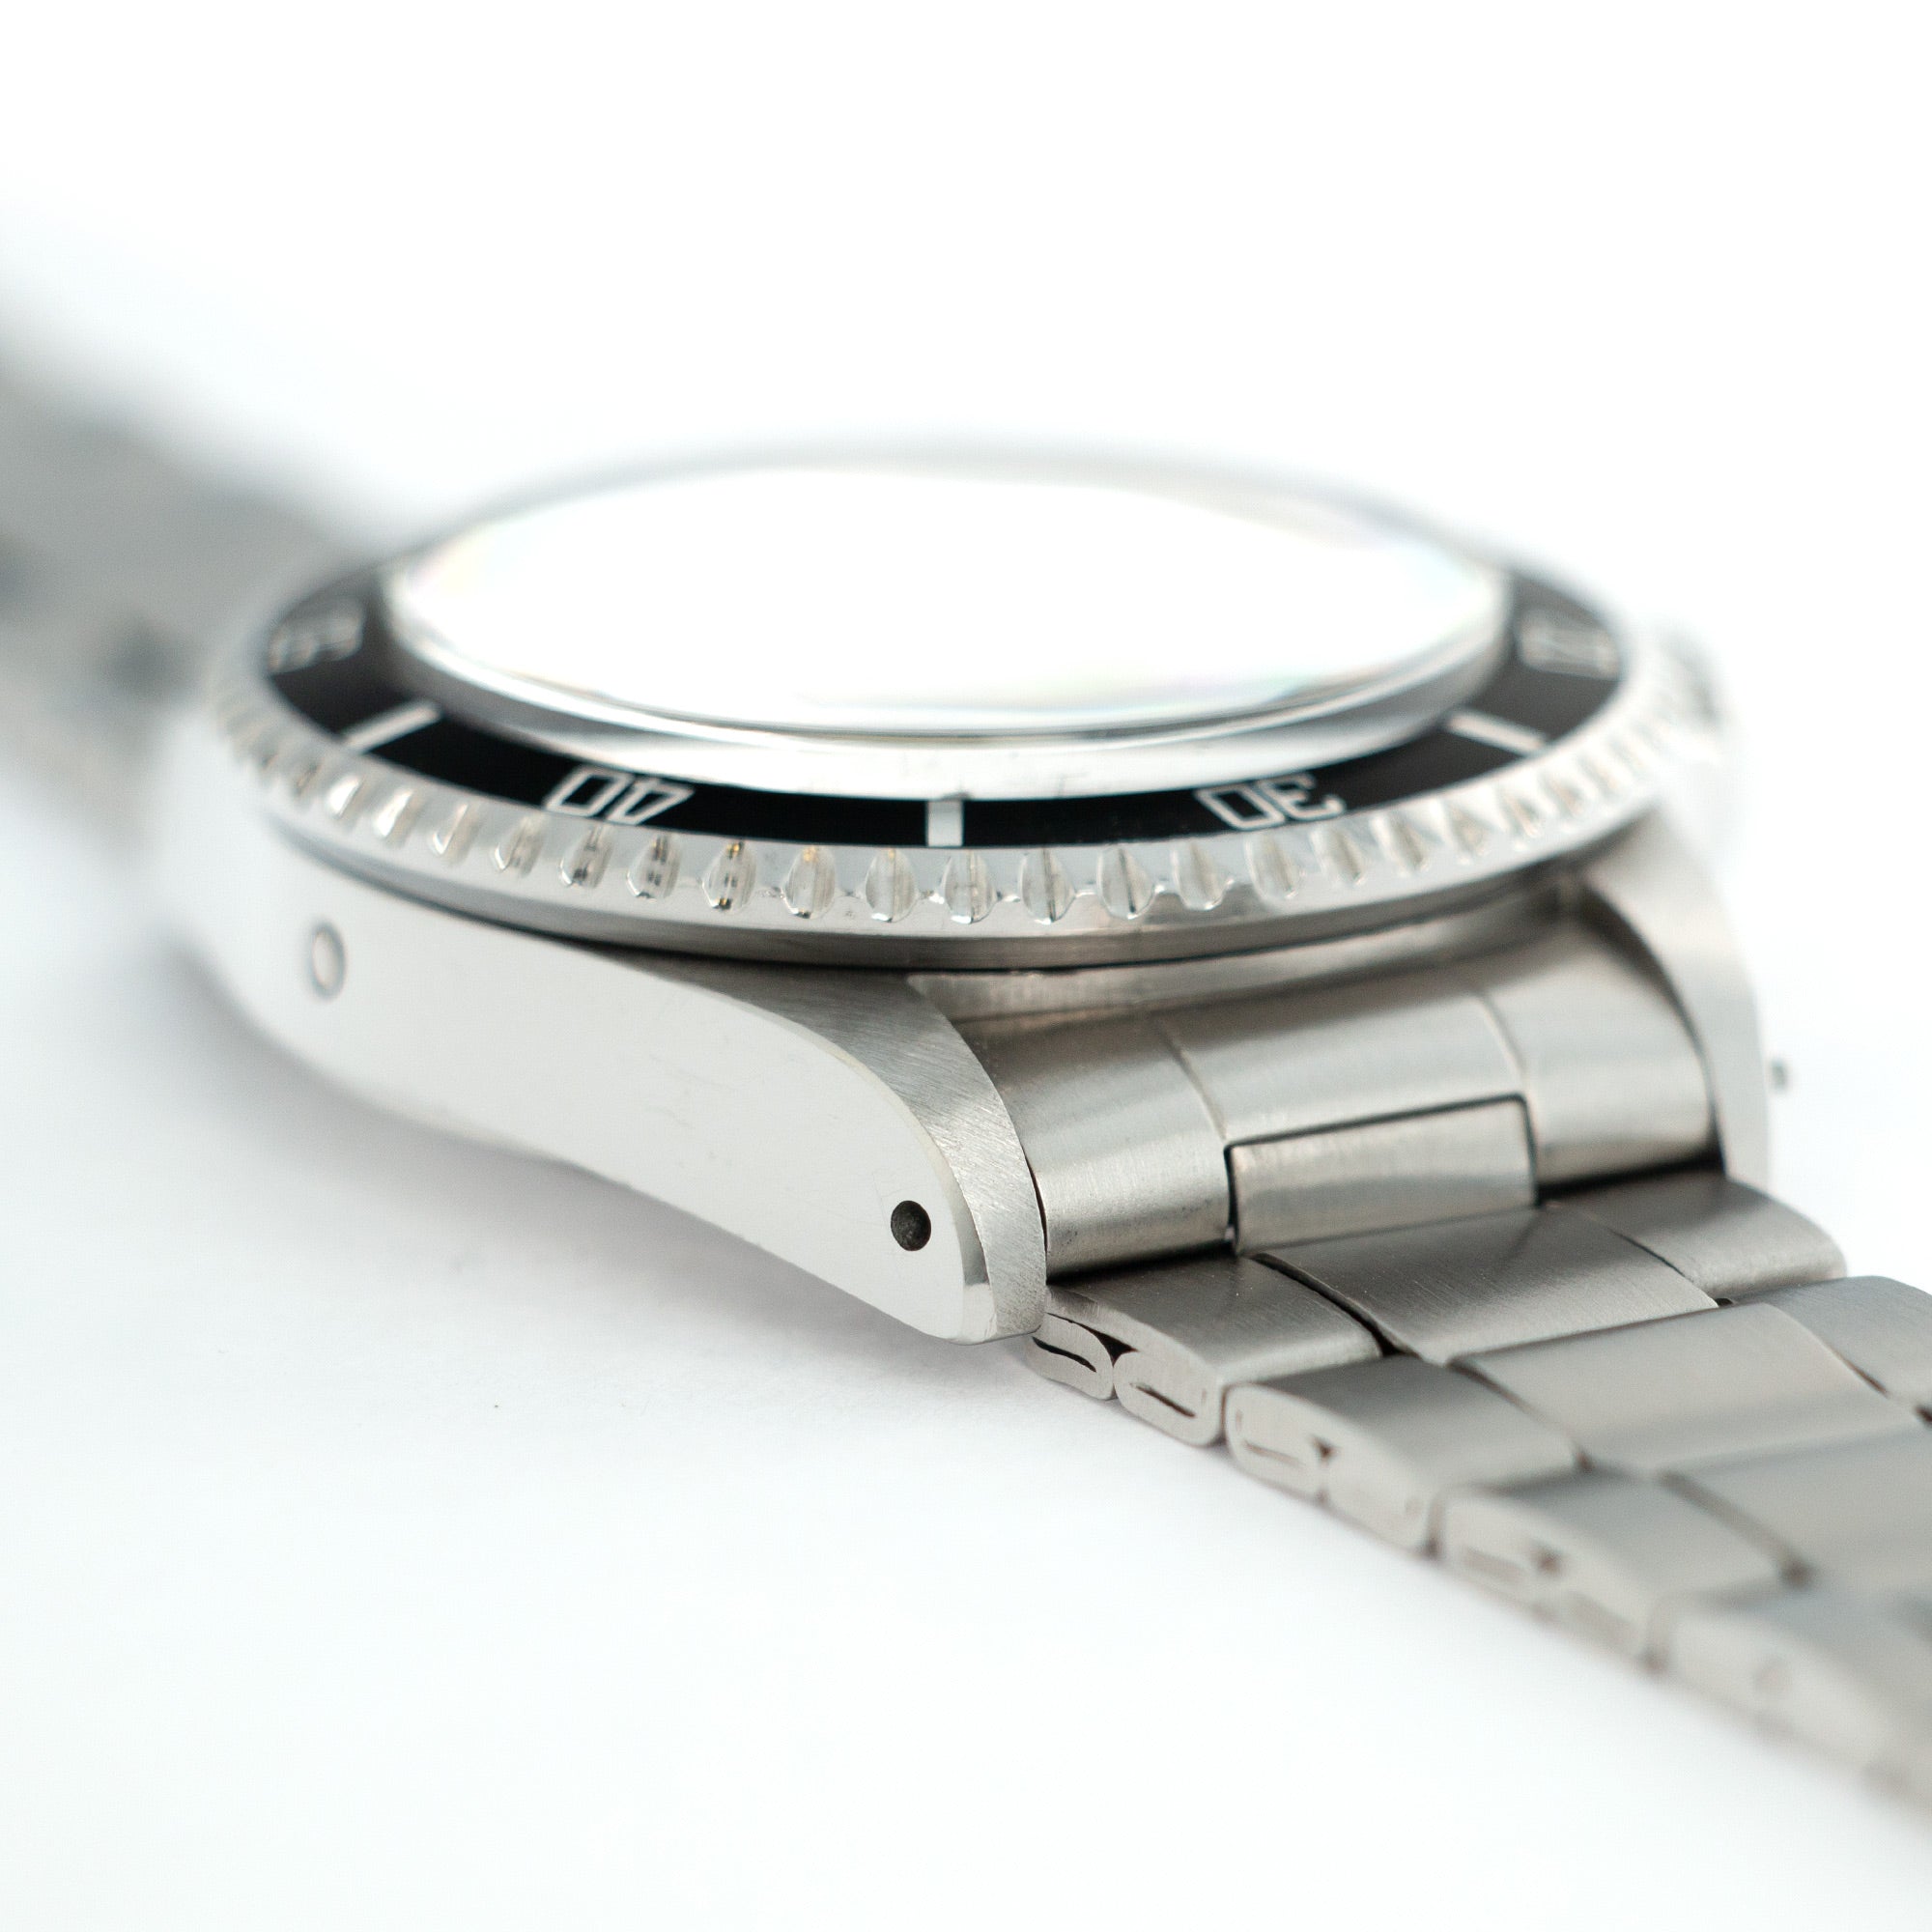 Rolex - Rolex Double Red Seadweller Watch Ref. 1665 - The Keystone Watches